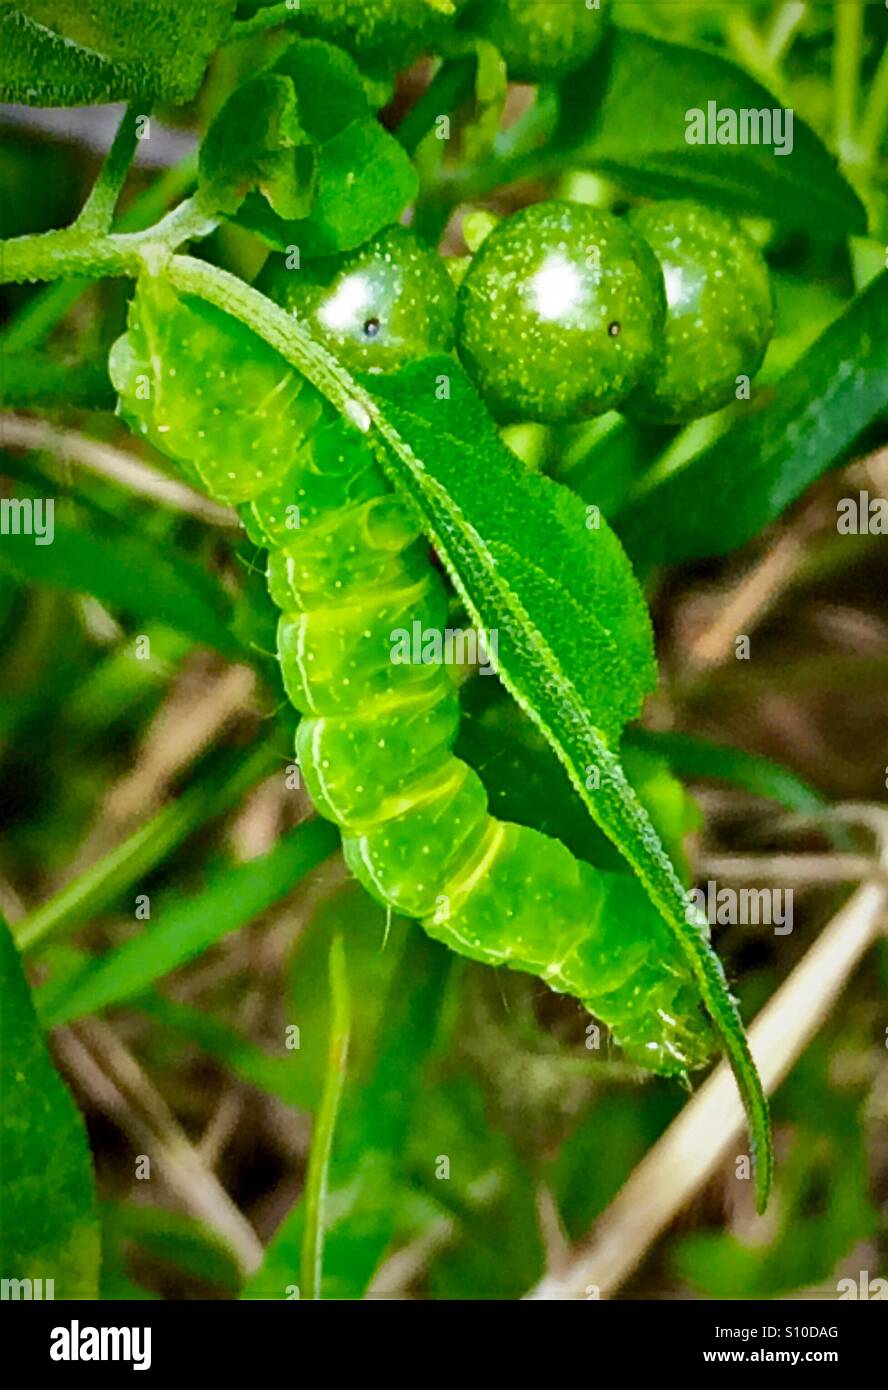 A bright green Cabbage Looper caterpillar munches on a leaf, Trichopulsia ni Stock Photo